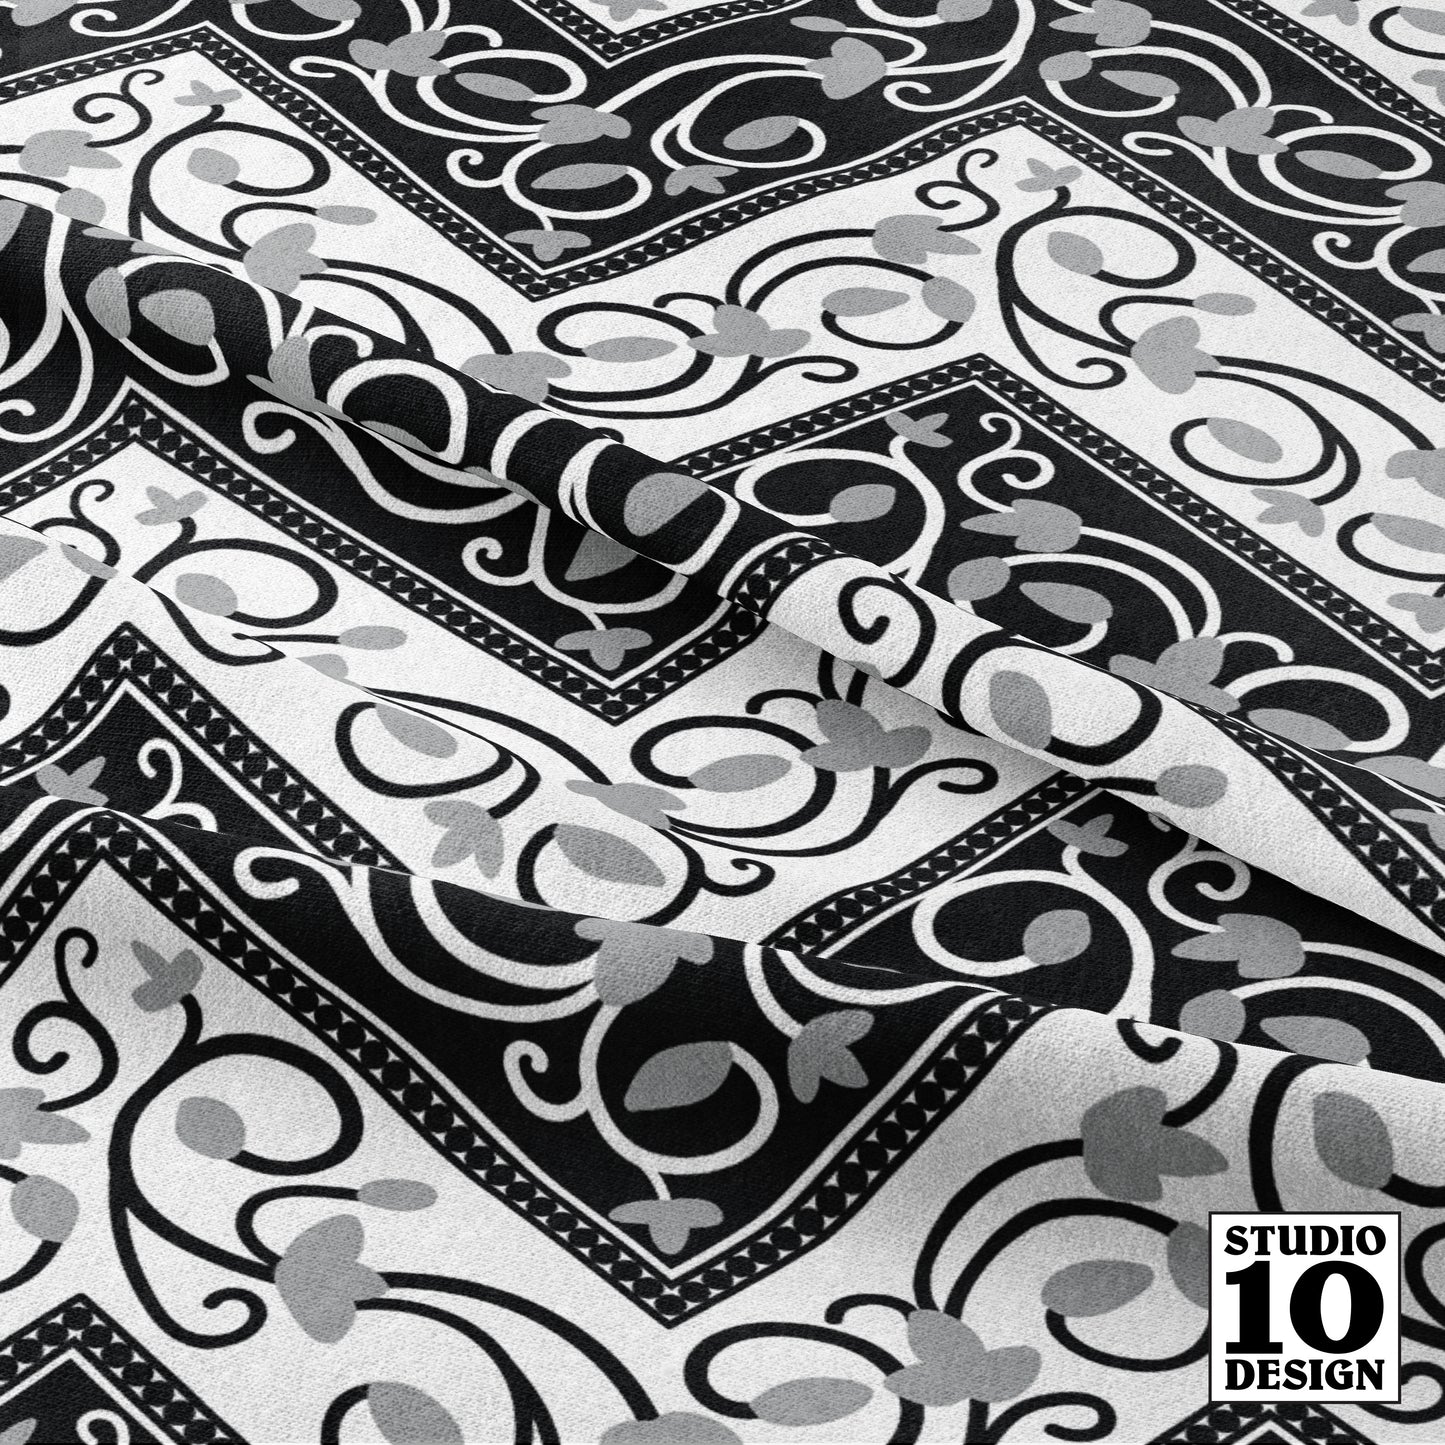 Chevron (Black, Grey, White) Printed Fabric by Studio Ten Design